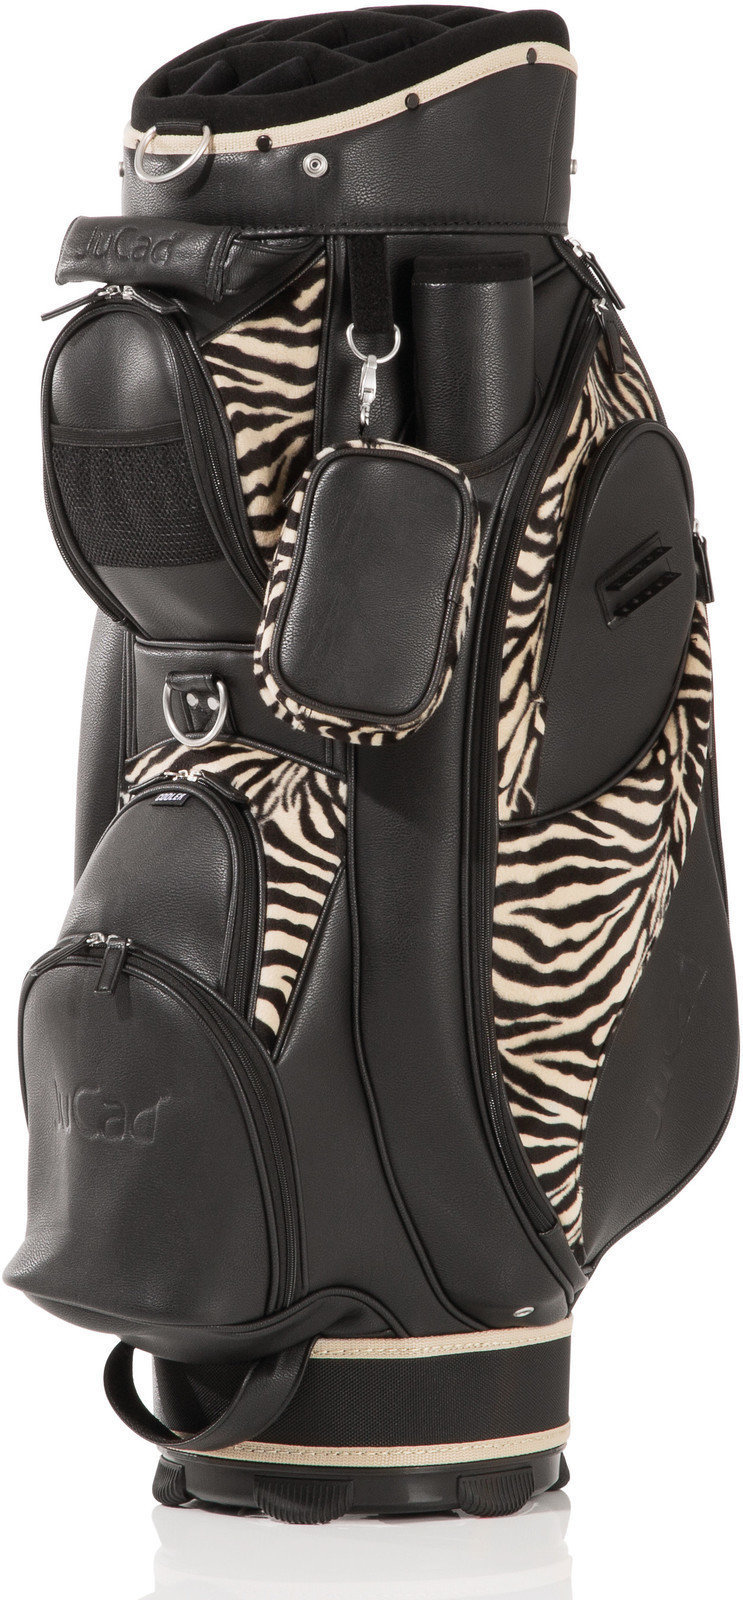 Golf Bag Jucad Style Black/Zebra Cart Bag